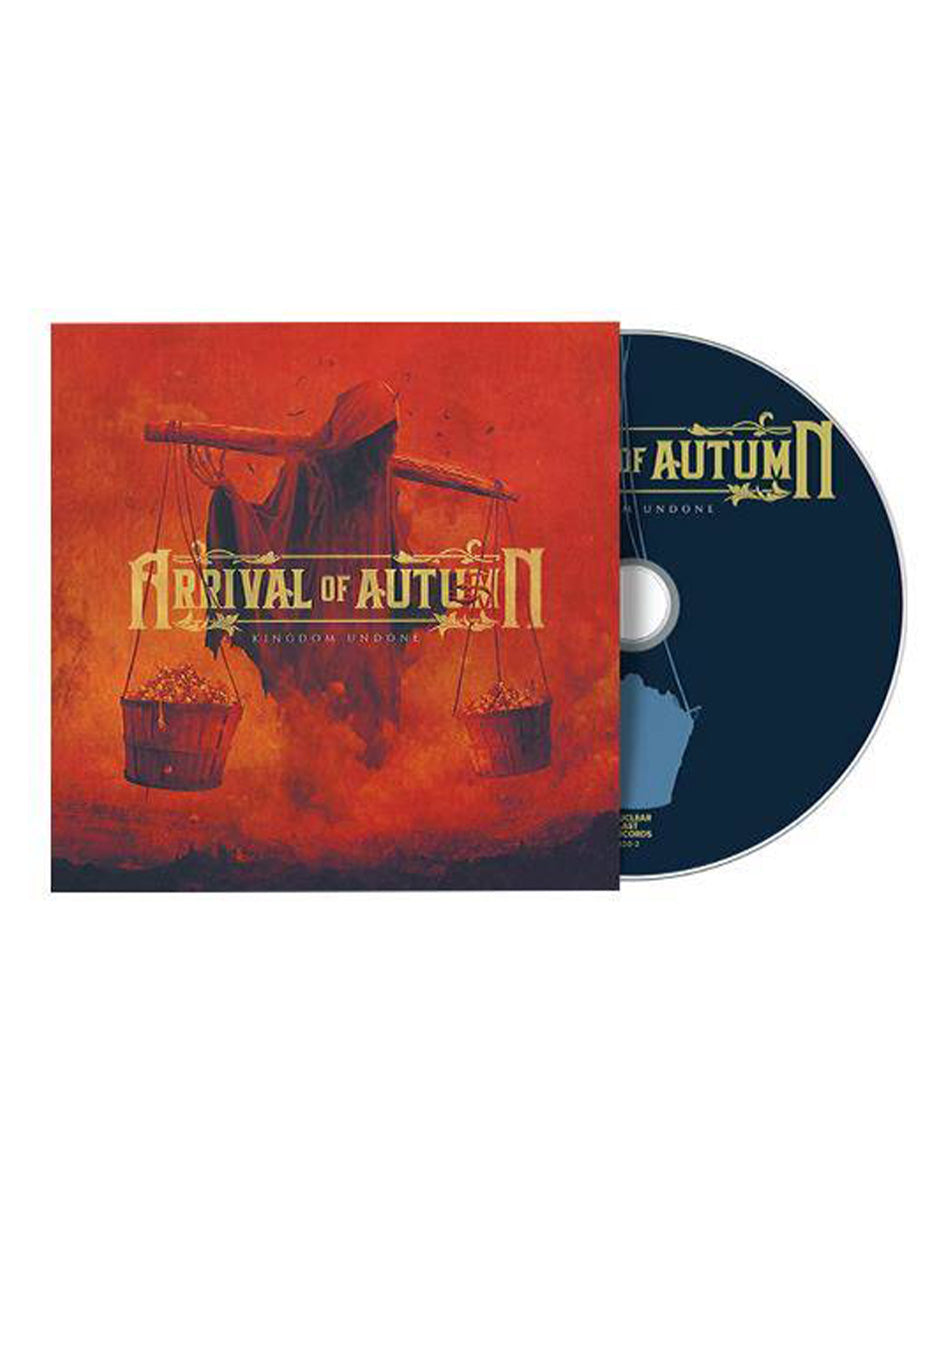 Arrival Of Autumn - Kingdom Undone - CD | Neutral-Image